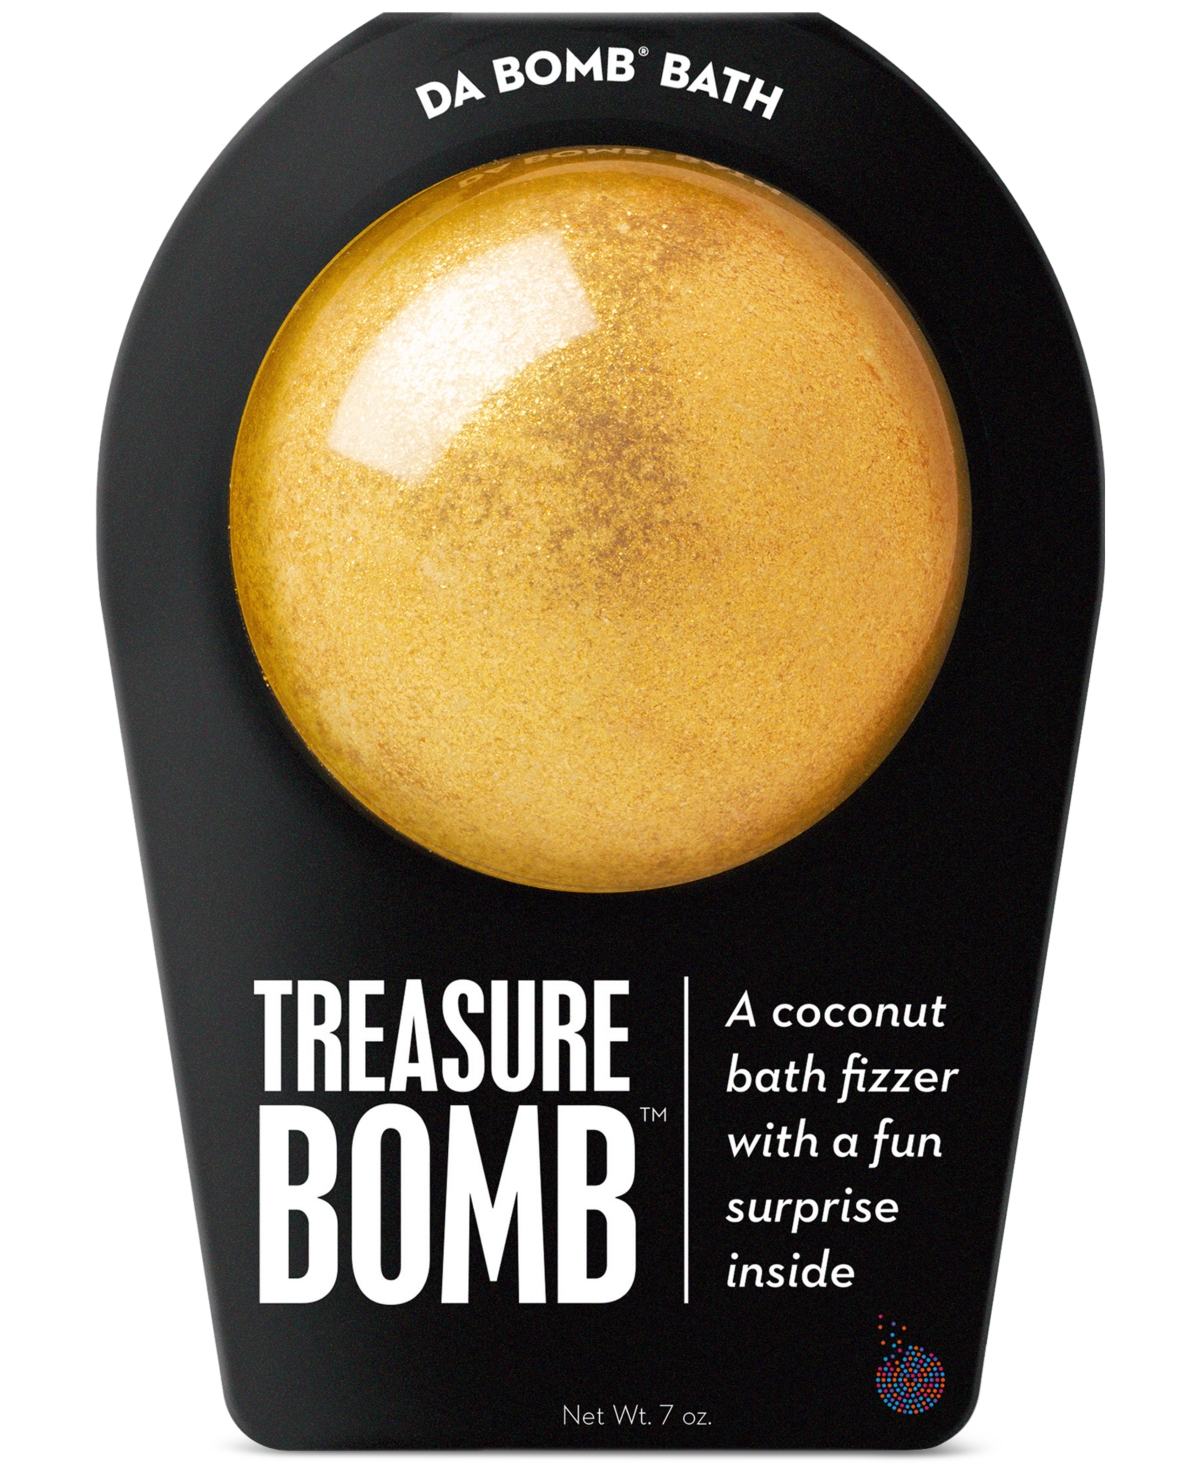 Treasure Bath Bomb, 7 oz. - Treasure Bomb